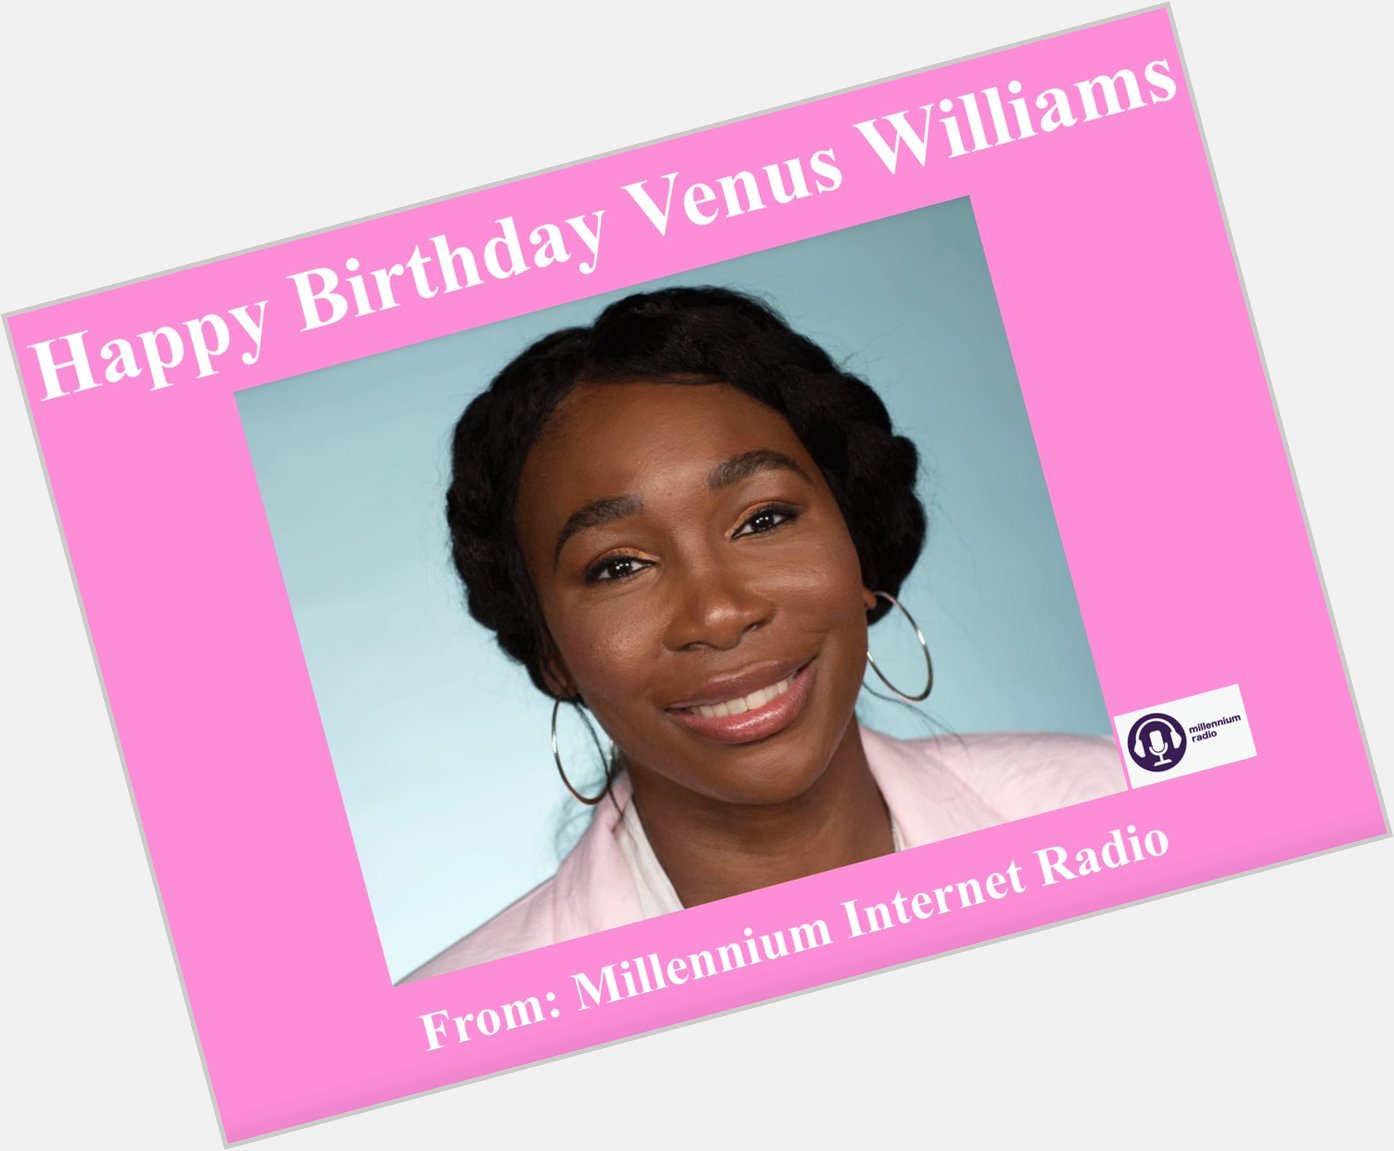 Happy Birthday to professional tennis player Venus Williams!! 